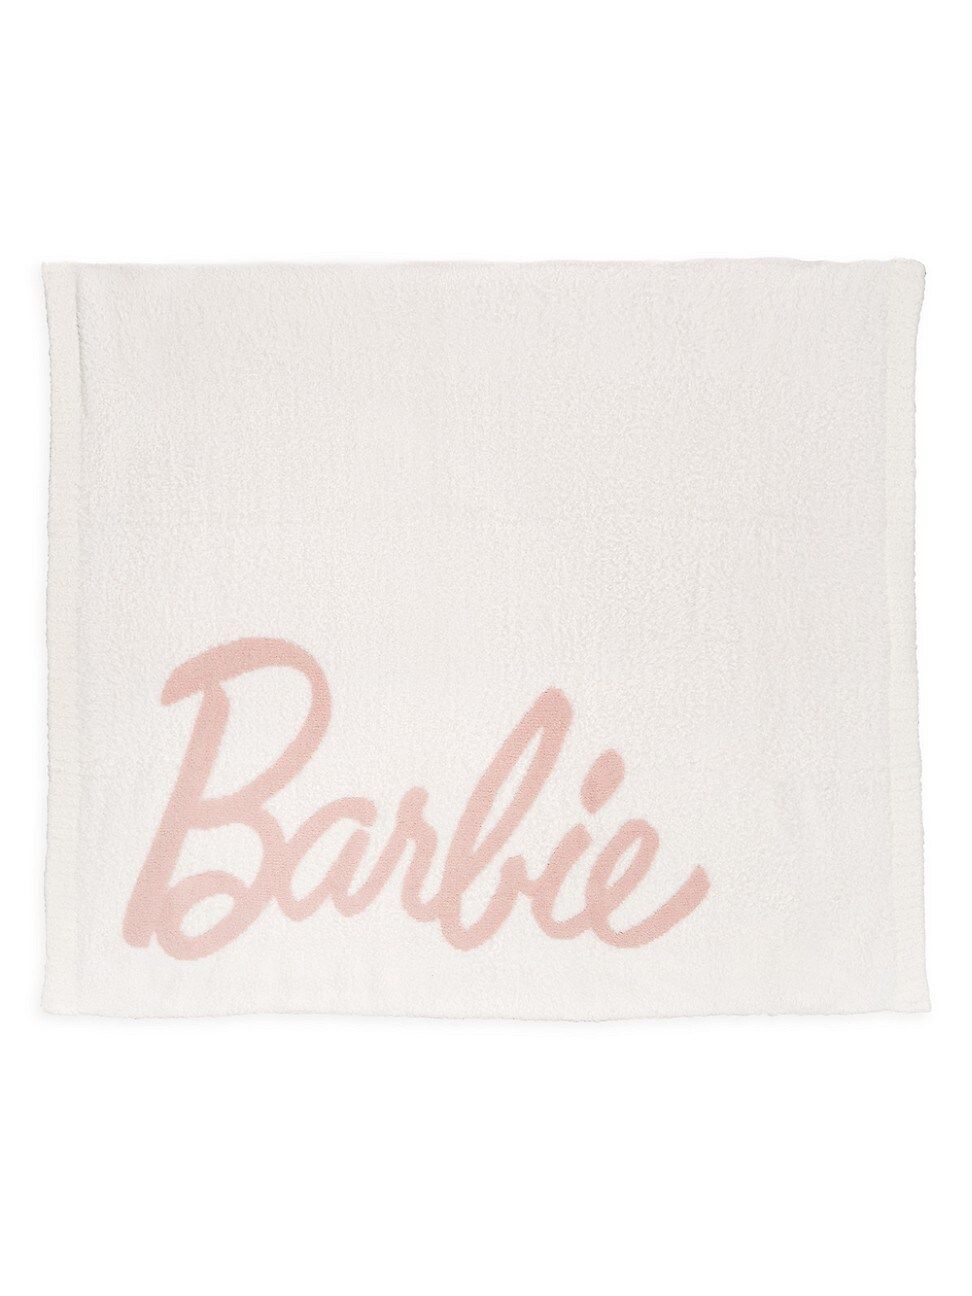 Barefoot Dreams x Barbie Limited Edition Blanket - Sea Salt Dusty Rose | Saks Fifth Avenue